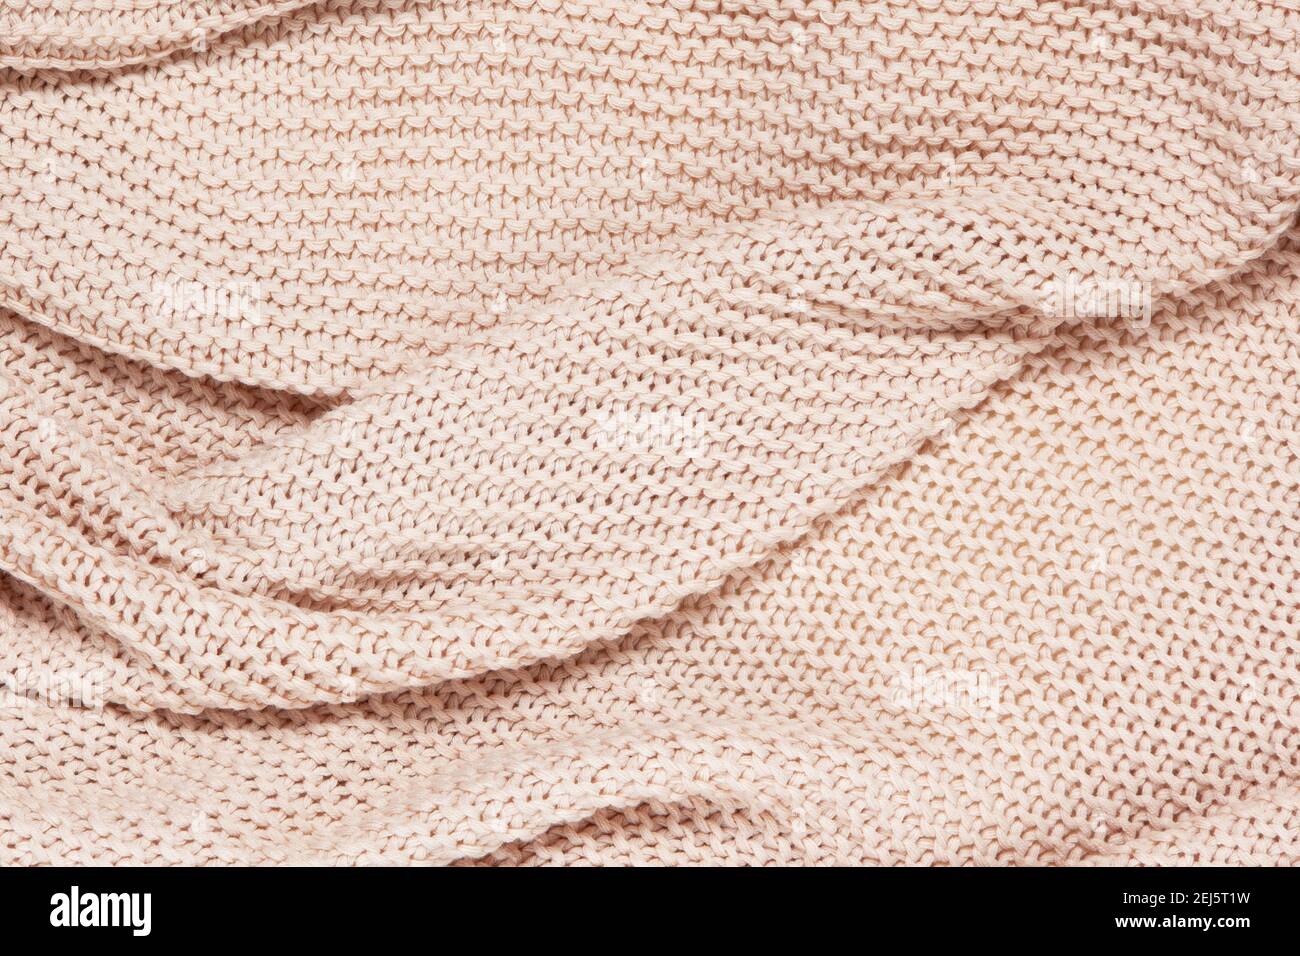 Soft Cotton Wool Balls On Pink Stock Photo 509520400